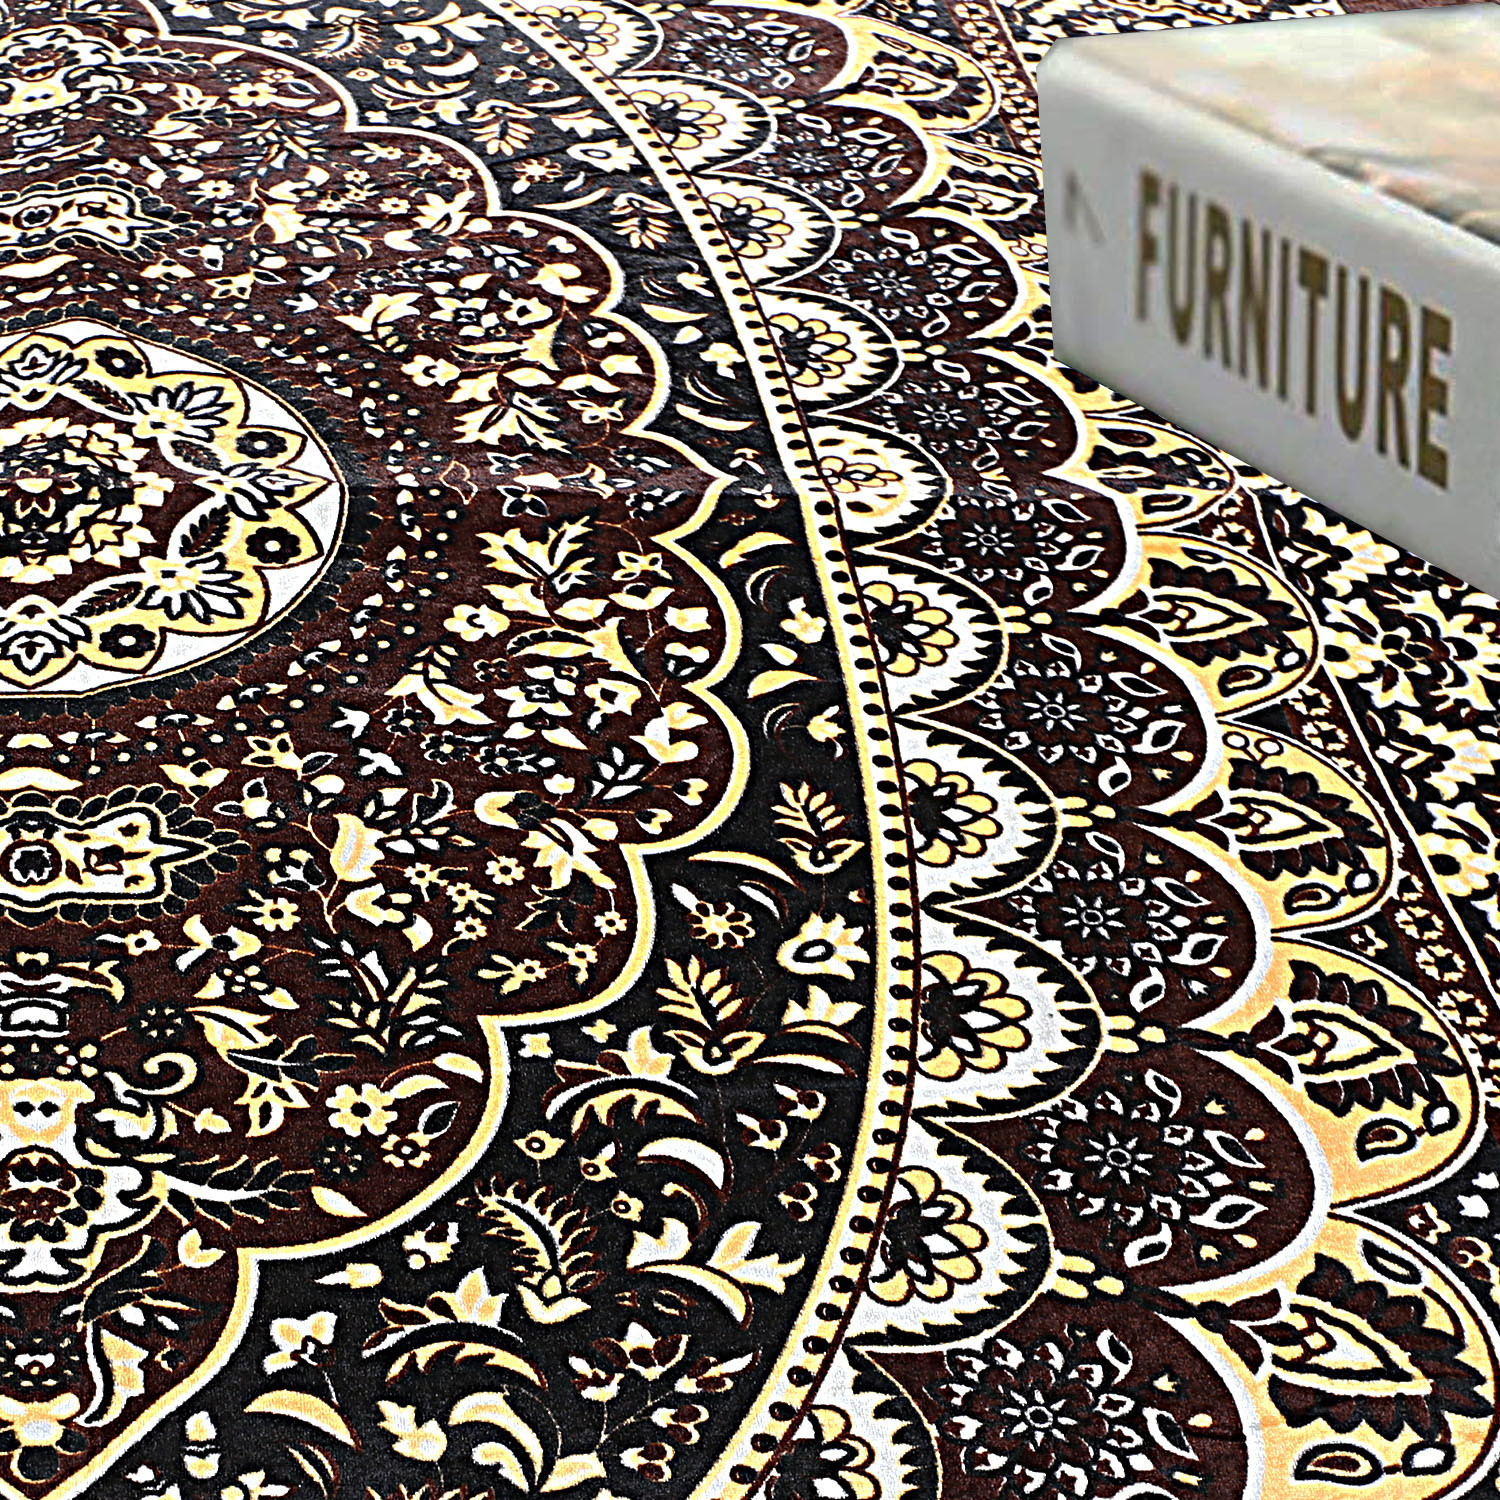 Kuber Industries Carpet|Water Absorption Kalamkari Paisley Pattern Floor Mat|Velvet Sitting Carpet for Hall, Living Room, 5x7 Feet (Brown)